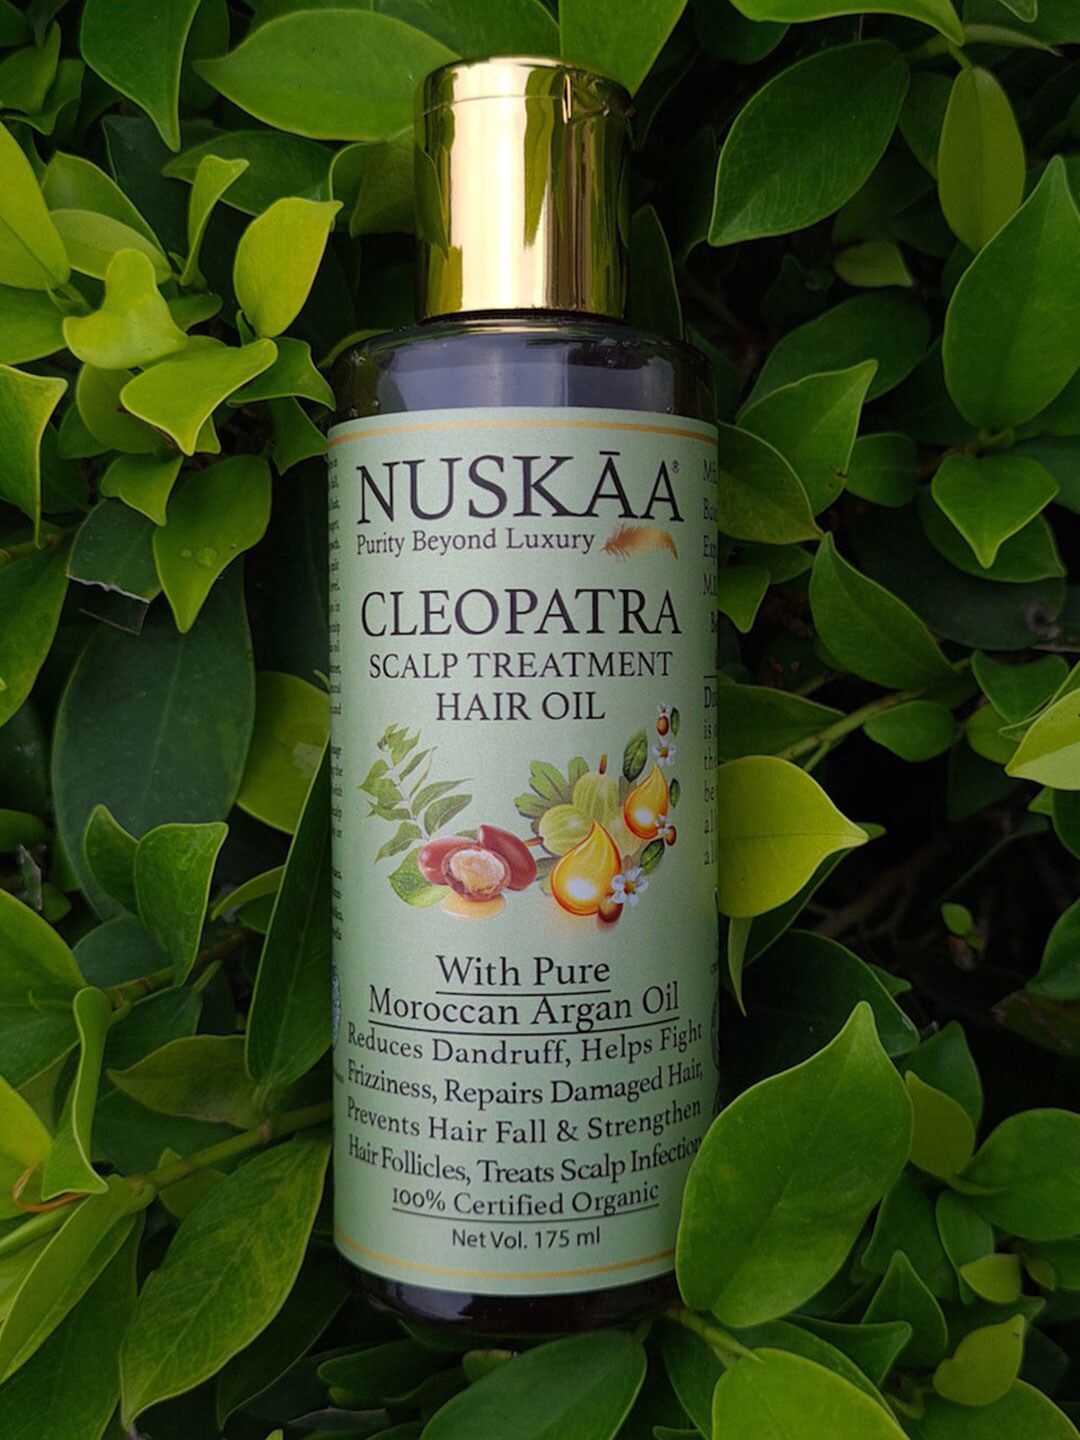 NUSKAA Cleopatra Antisceptic Scalp Treatment Hair Oil 175ml Price in India